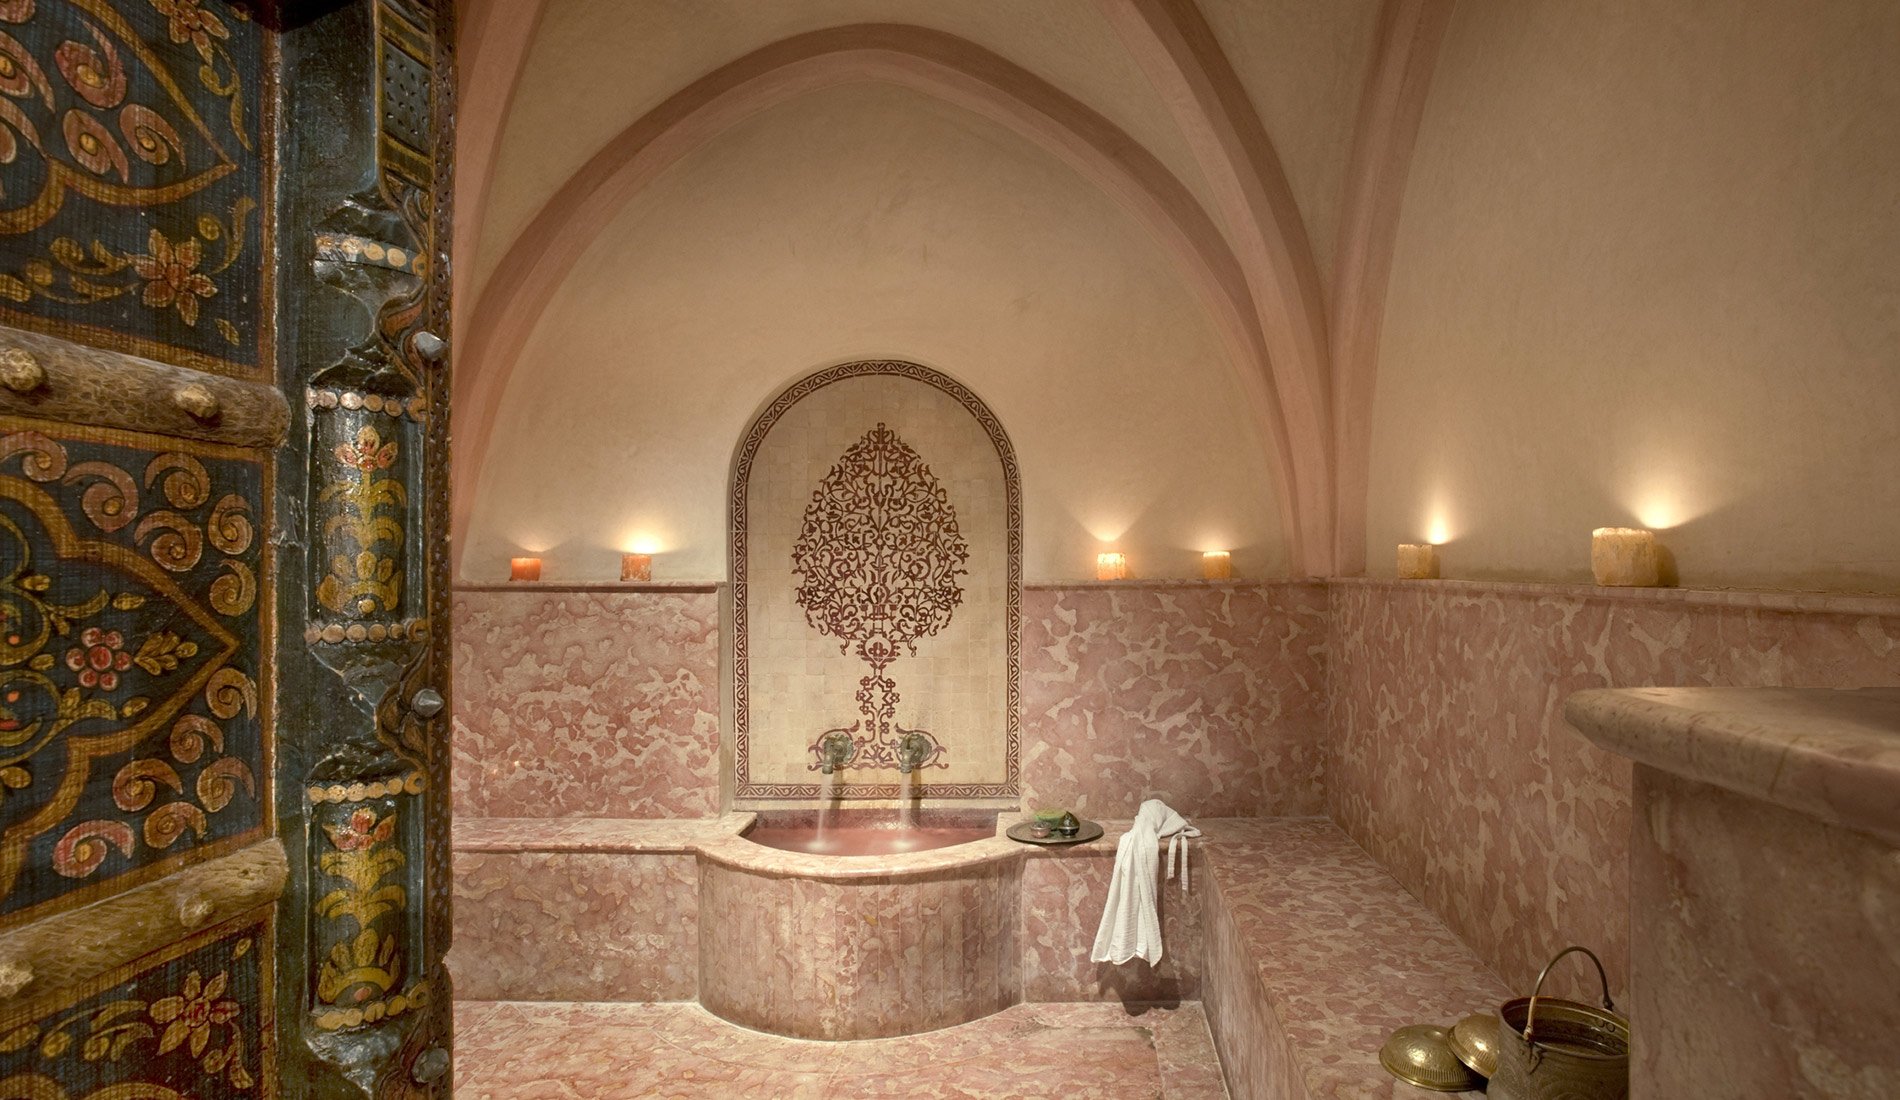 Luxury Hotel La Sultana Marrakesh 5* Africa Marocco Marrakesh spa relaxation